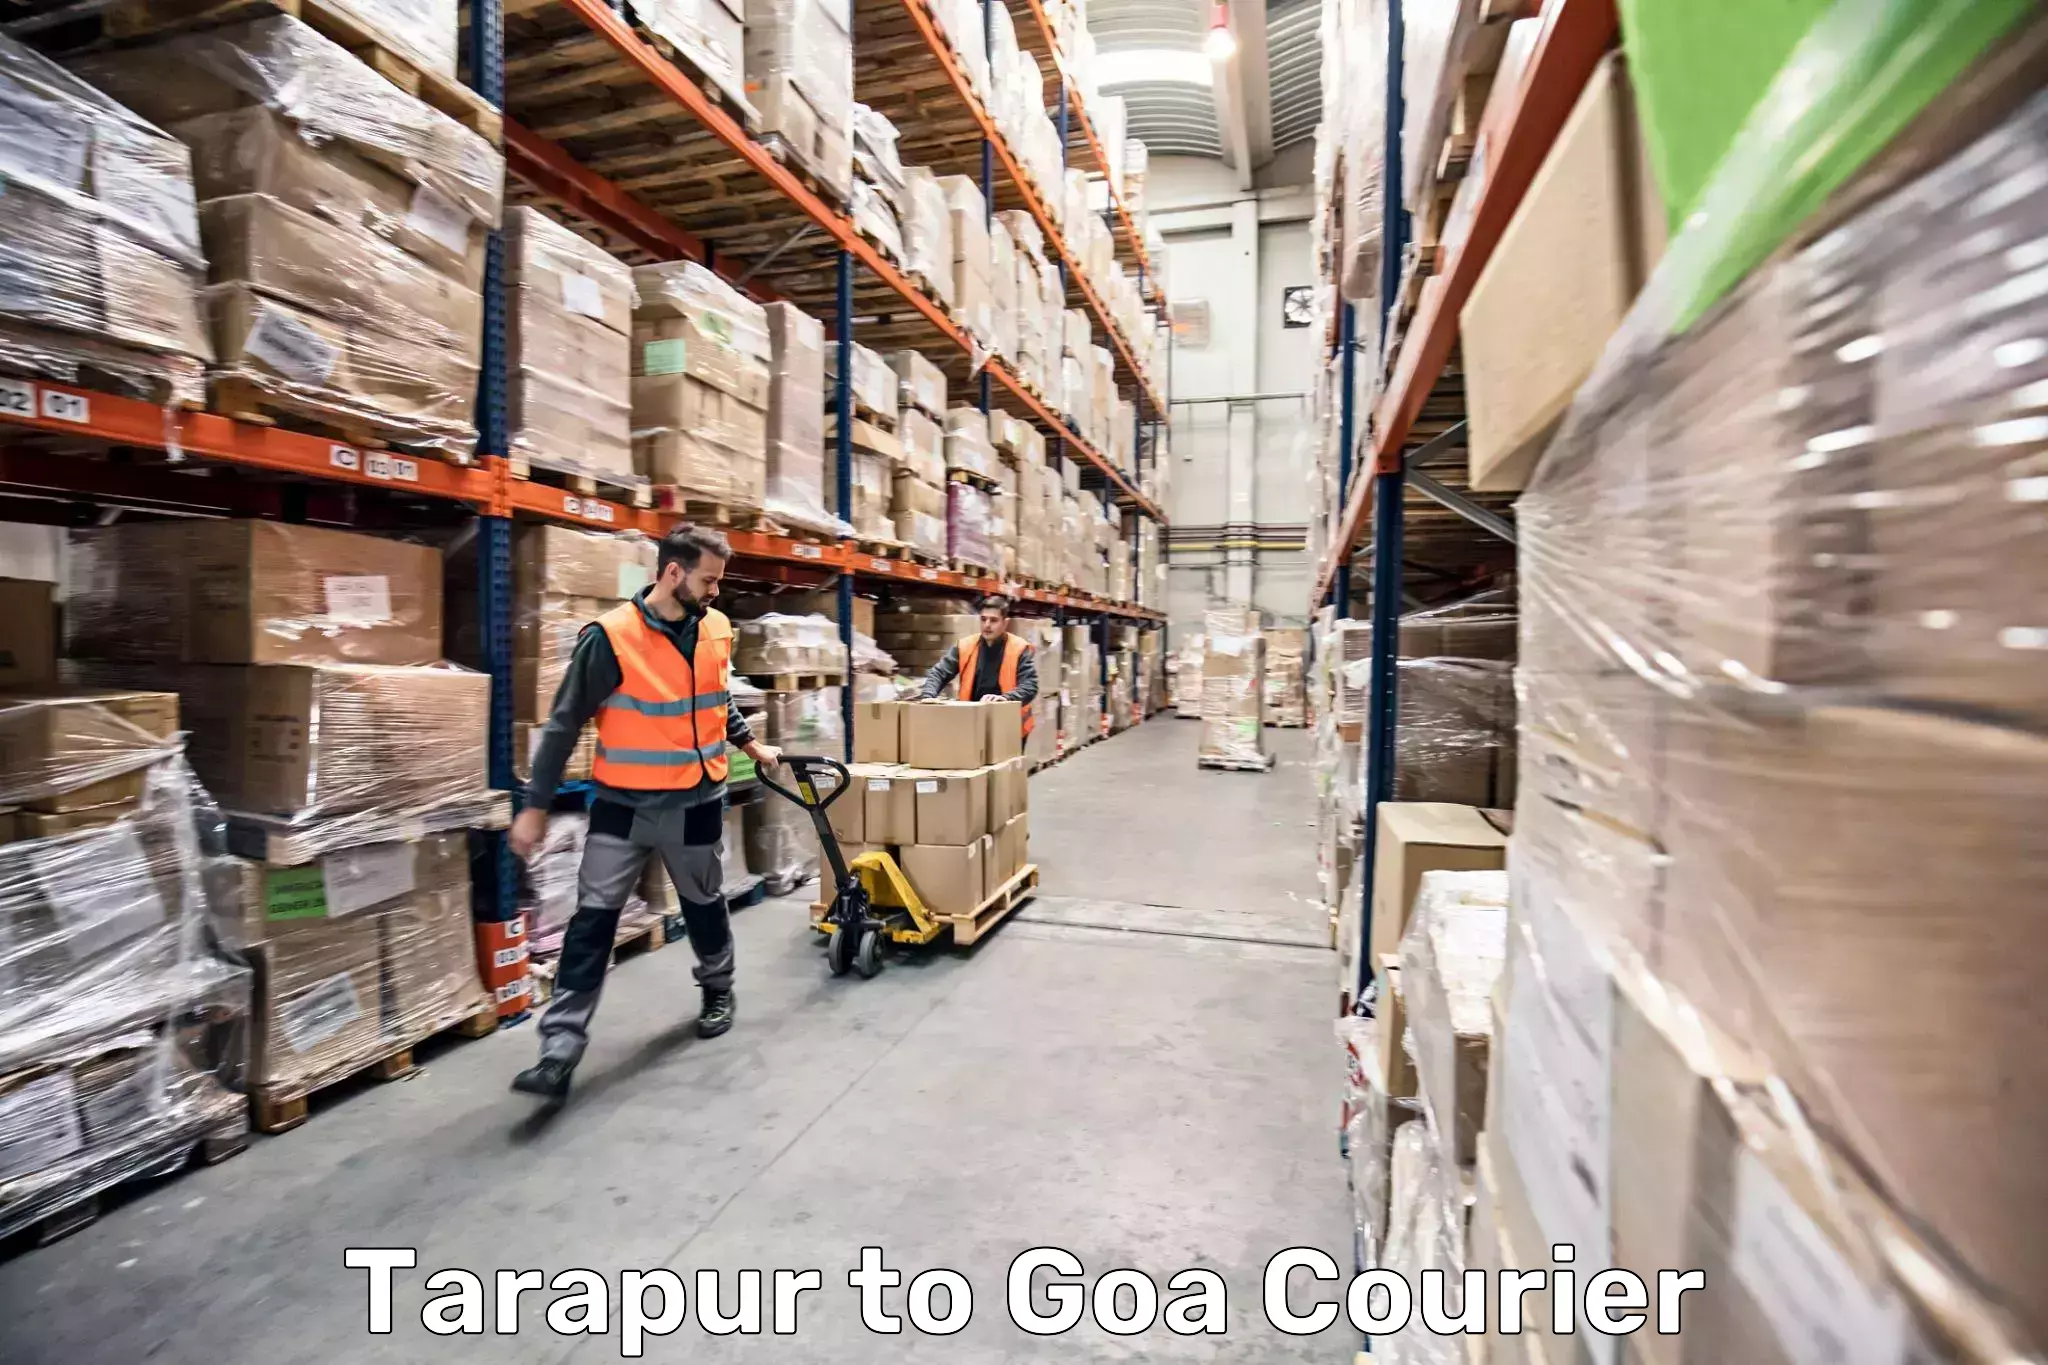 Luggage delivery network Tarapur to Goa